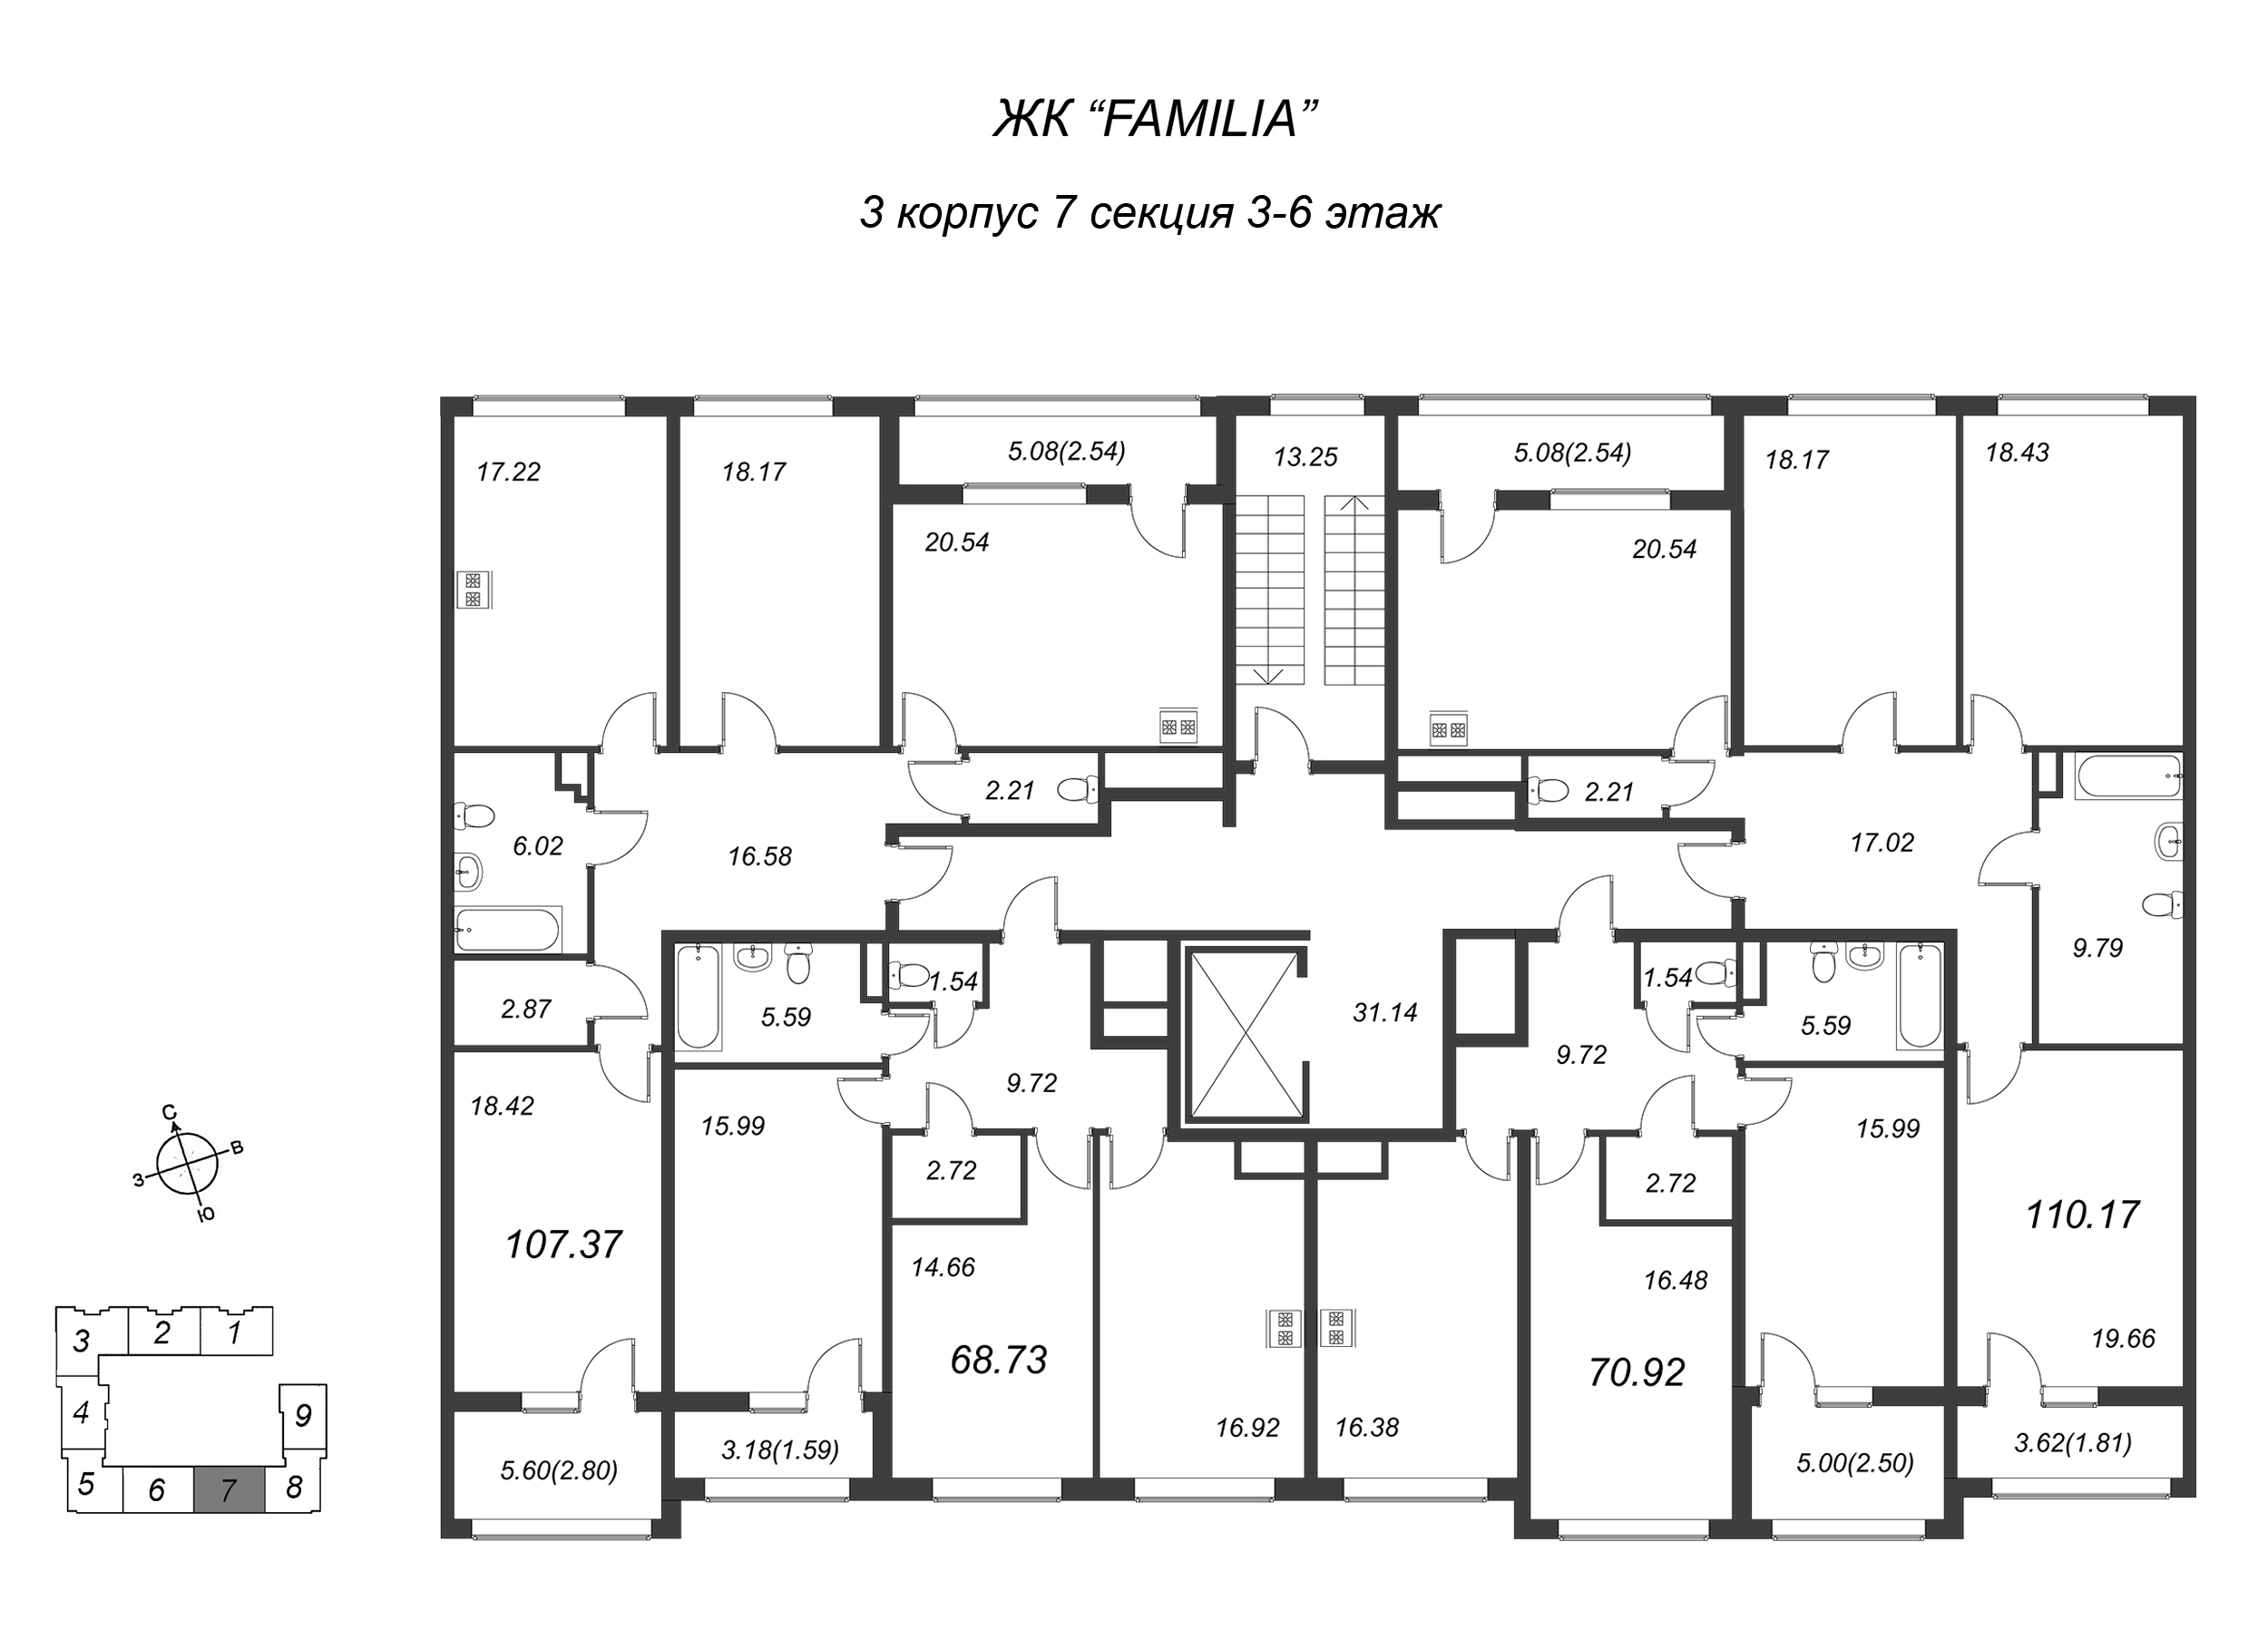 4-комнатная (Евро) квартира, 110.4 м² - планировка этажа